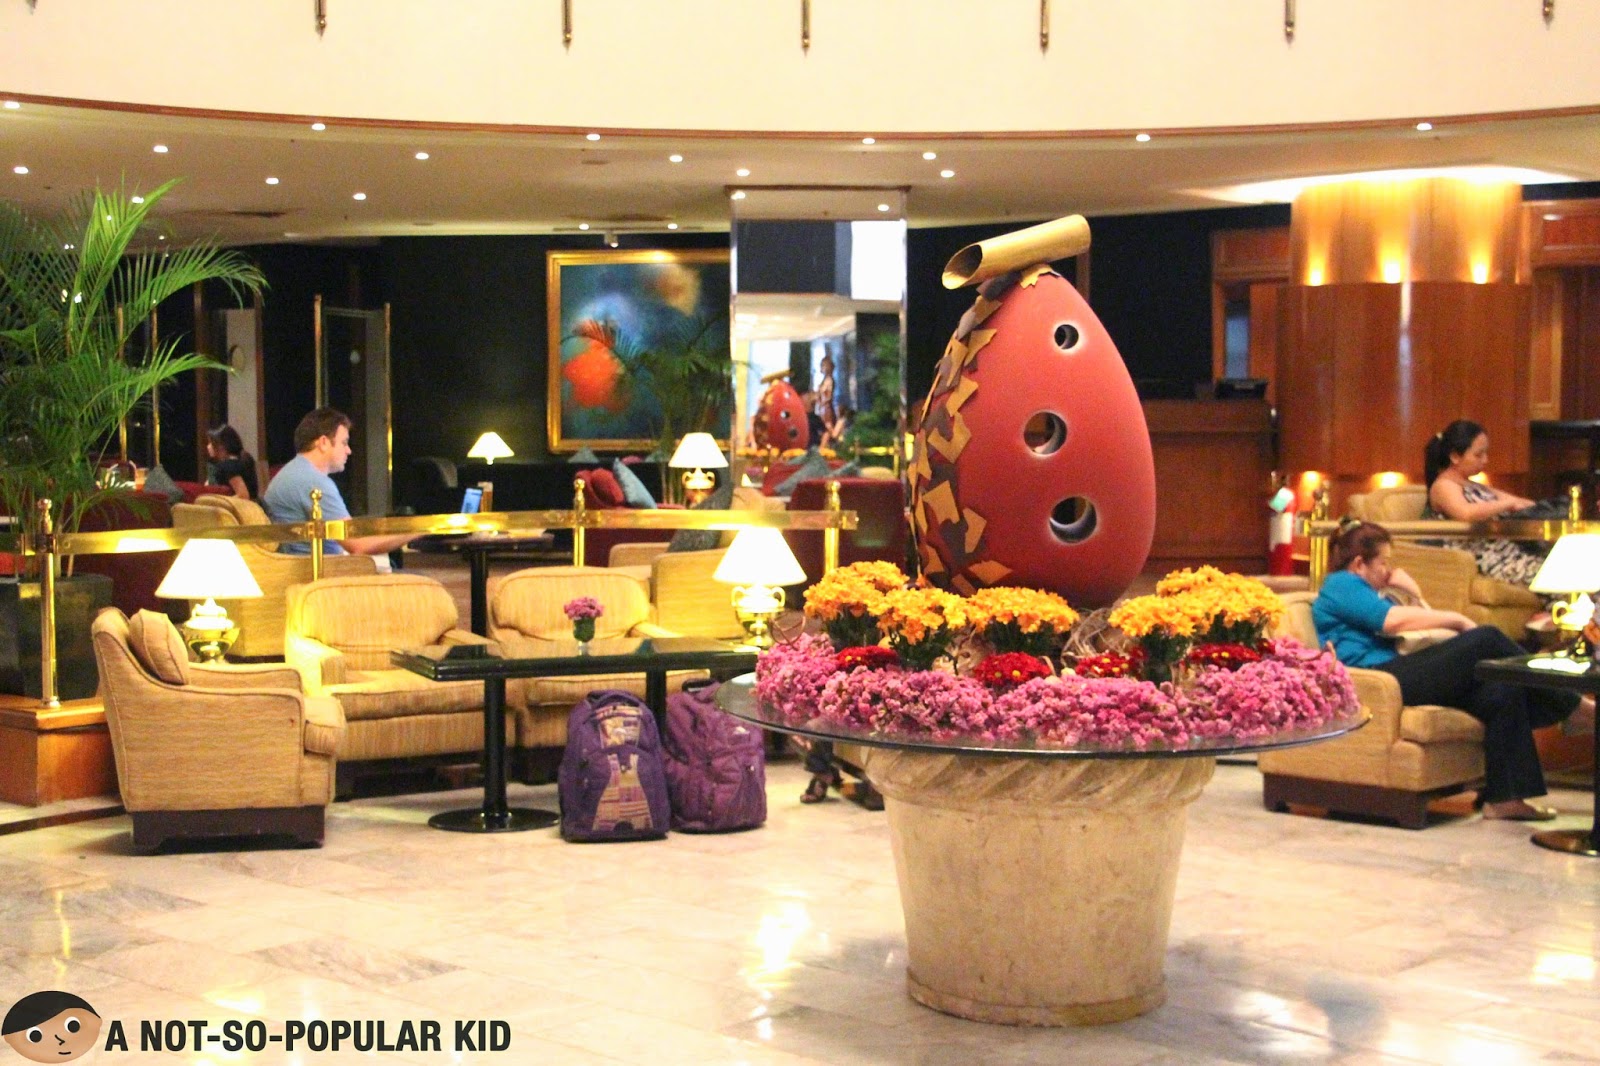 The inviting lobby of the Mandarin Oriental Hotel